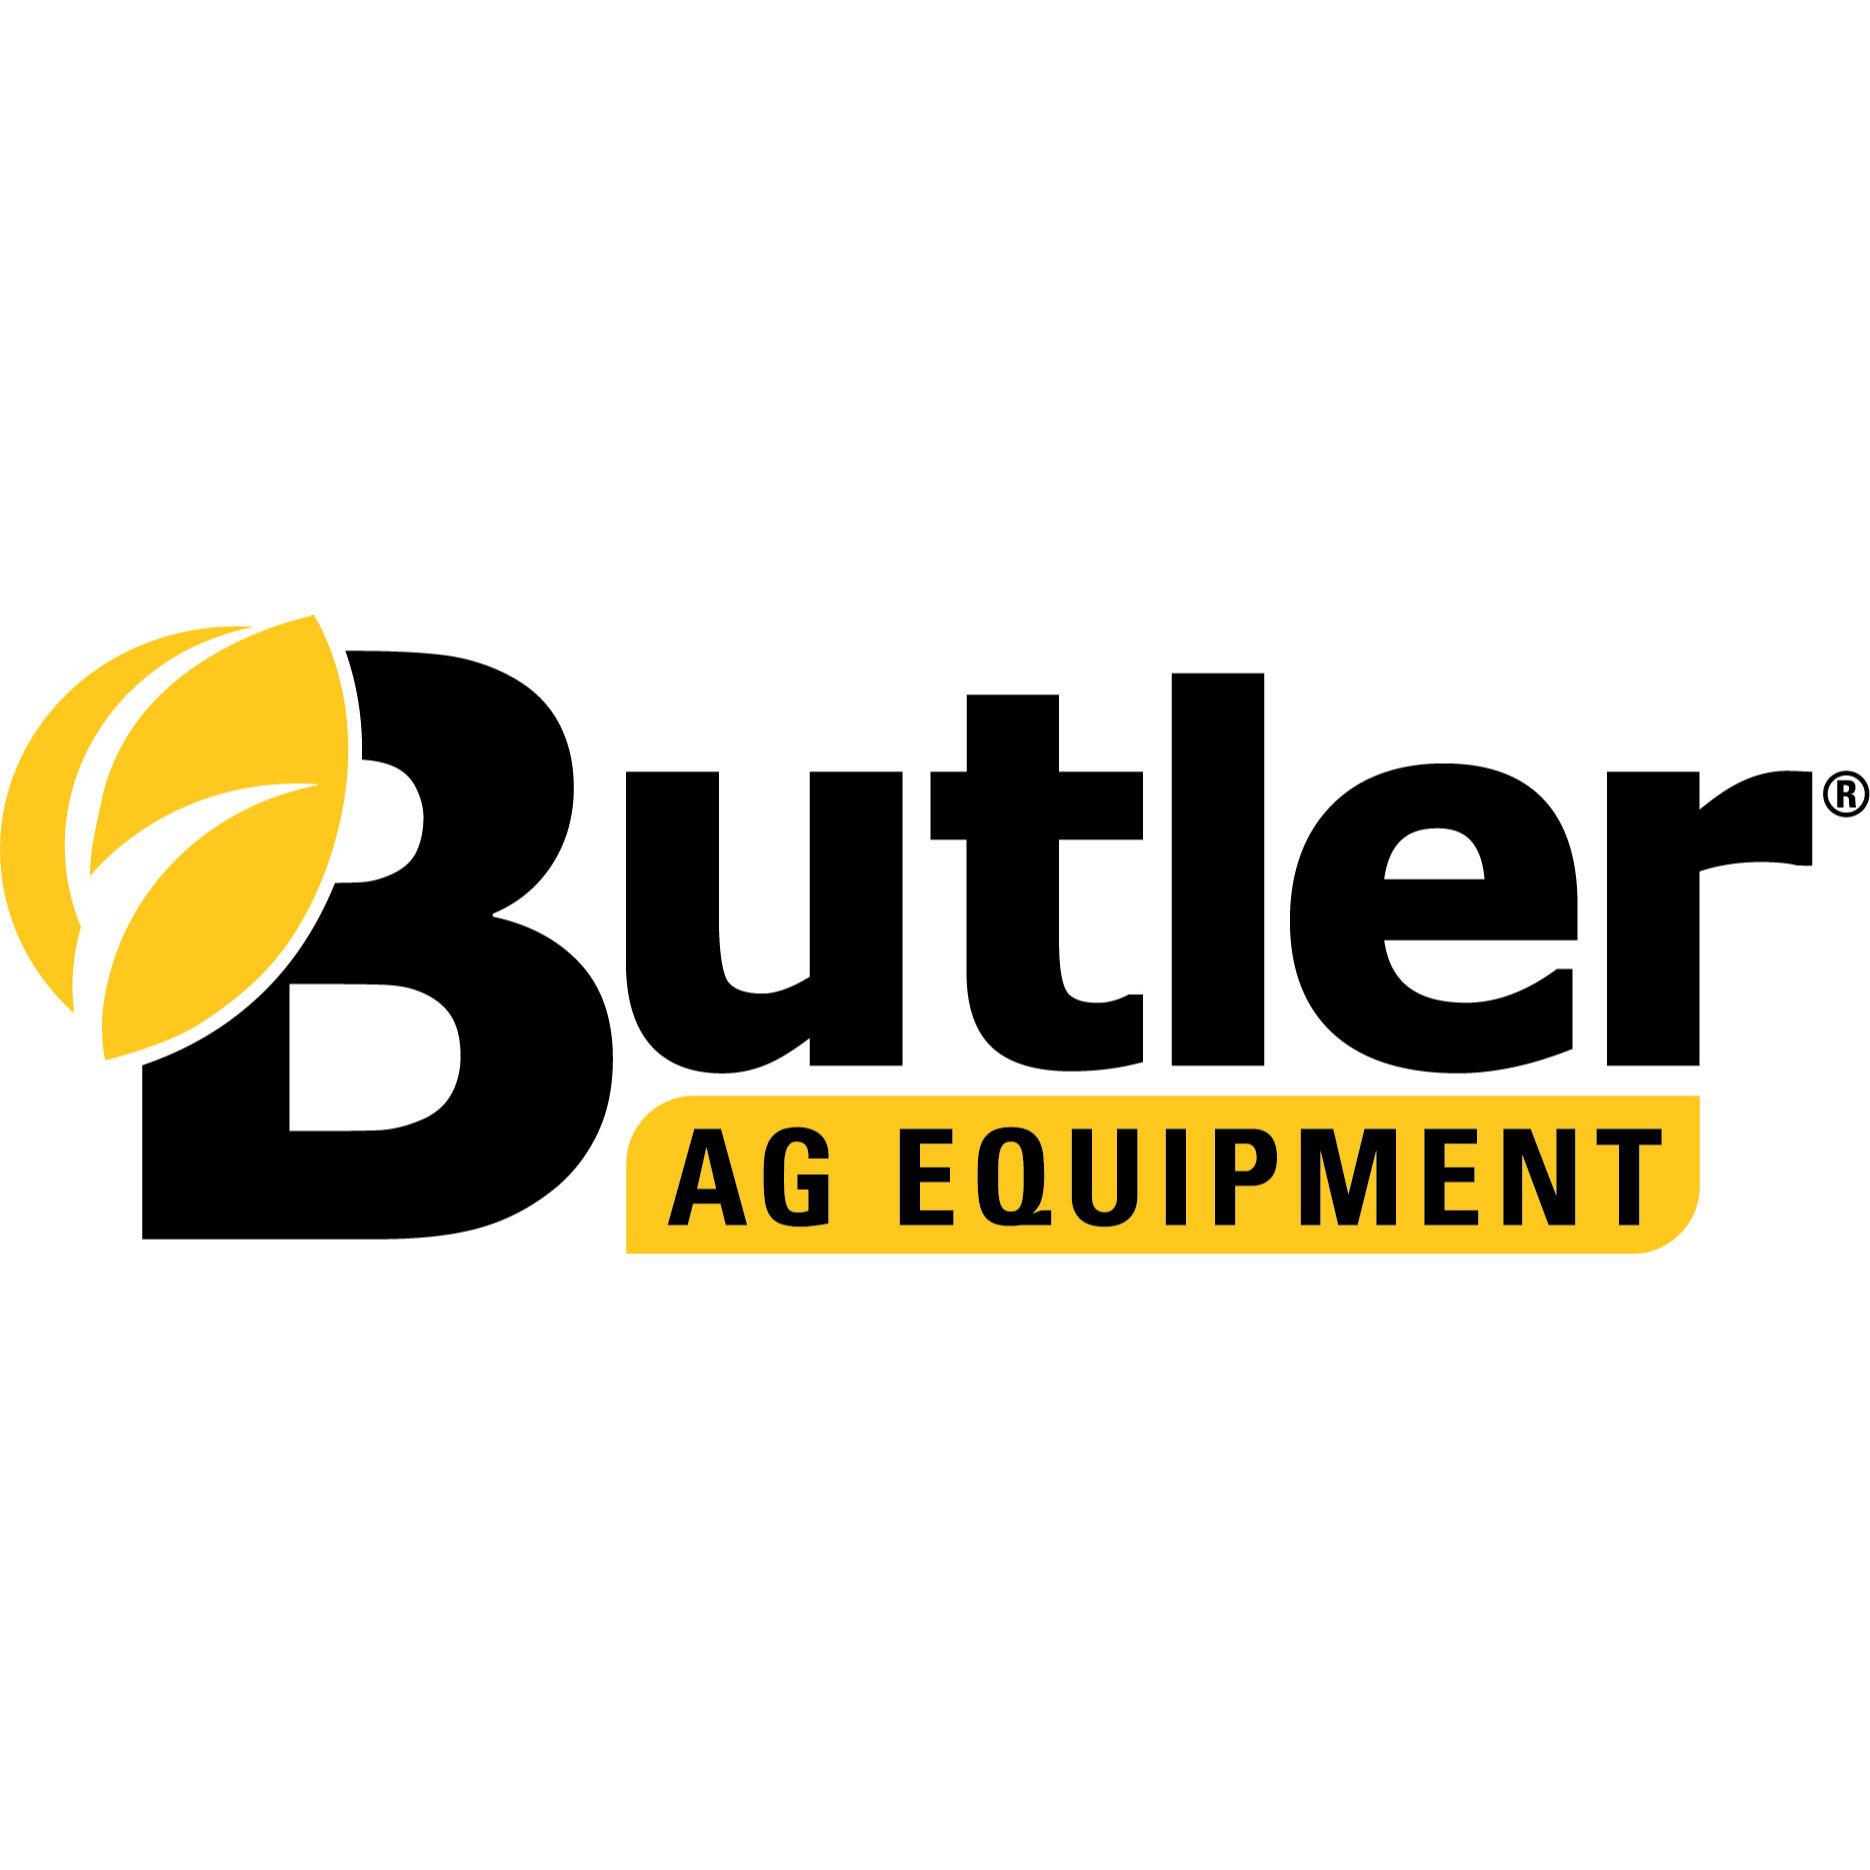 Butler Ag Equipment - Fremont, NE 68025 - (402)721-2800 | ShowMeLocal.com